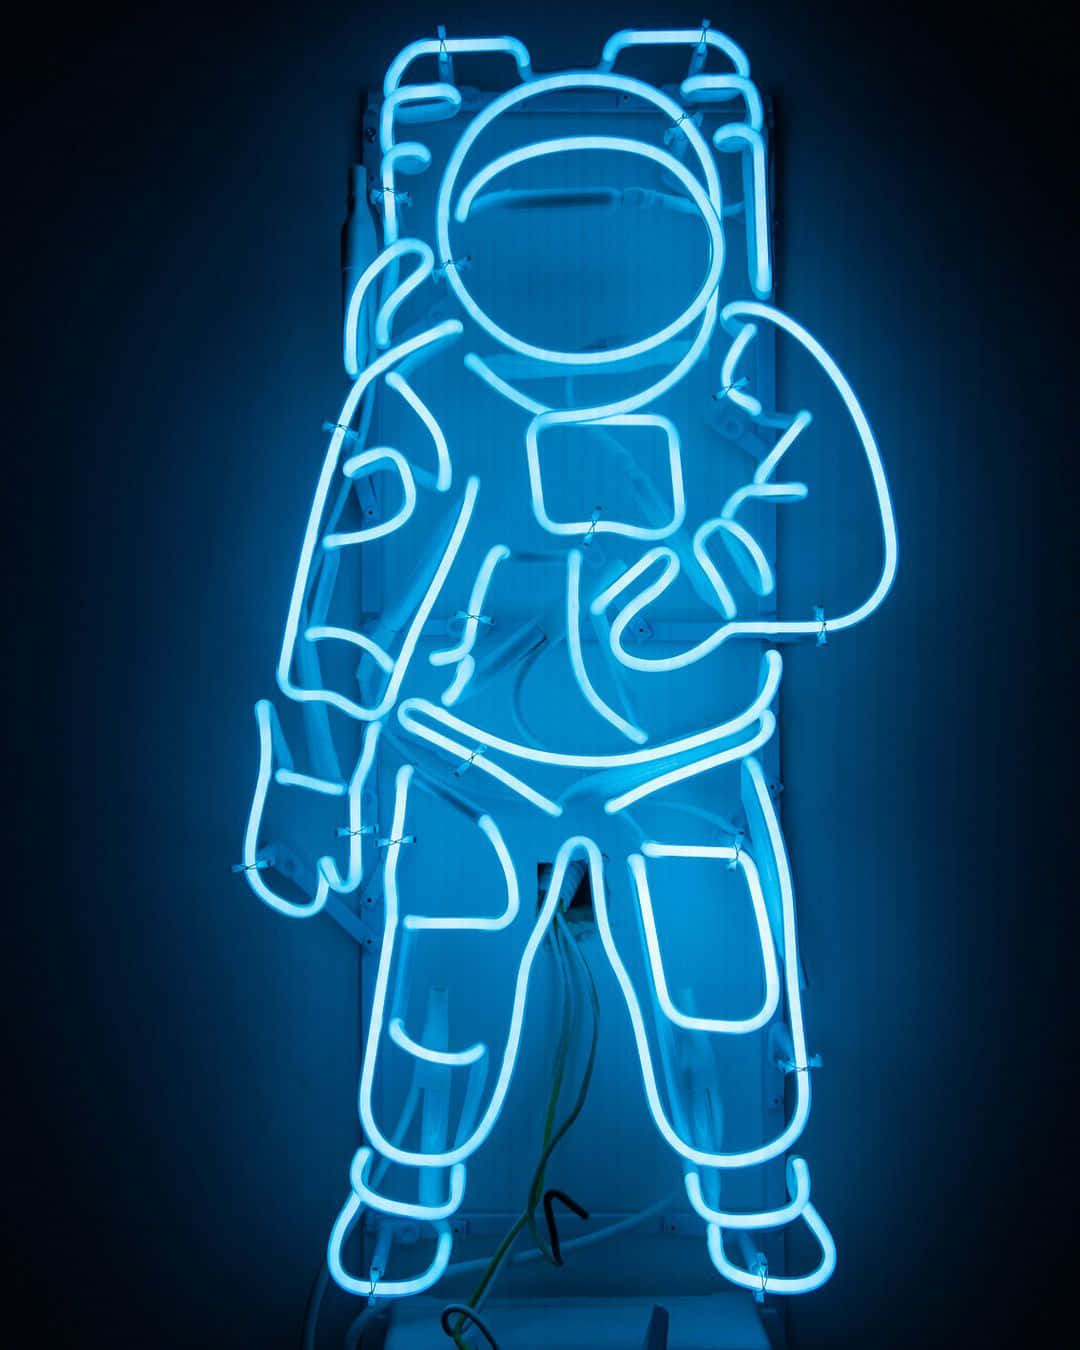 Illuminating Neon Blue Aesthetic - Your Digital Escape